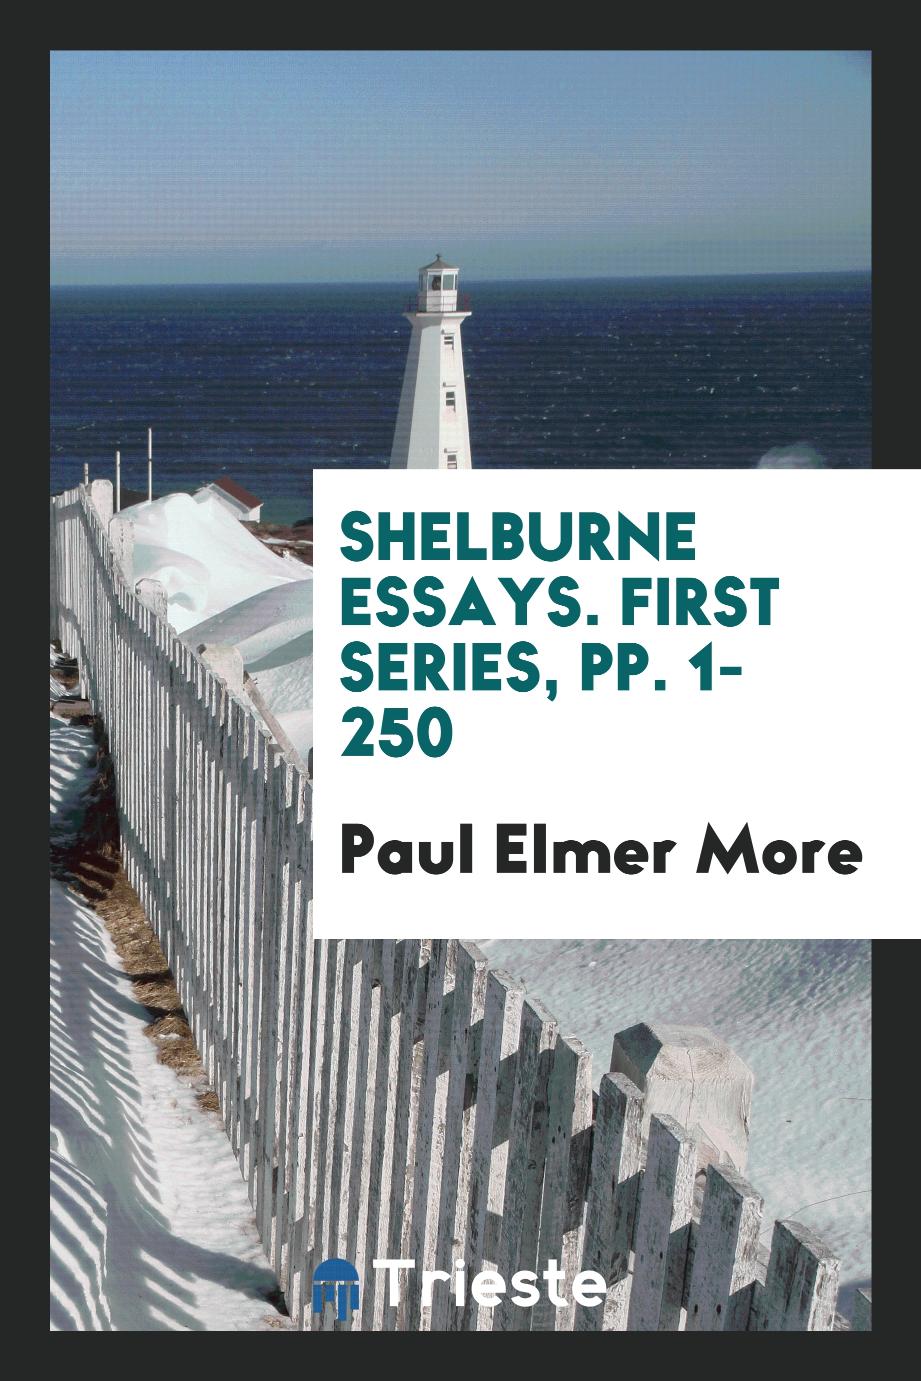 Shelburne Essays. First Series, pp. 1-250